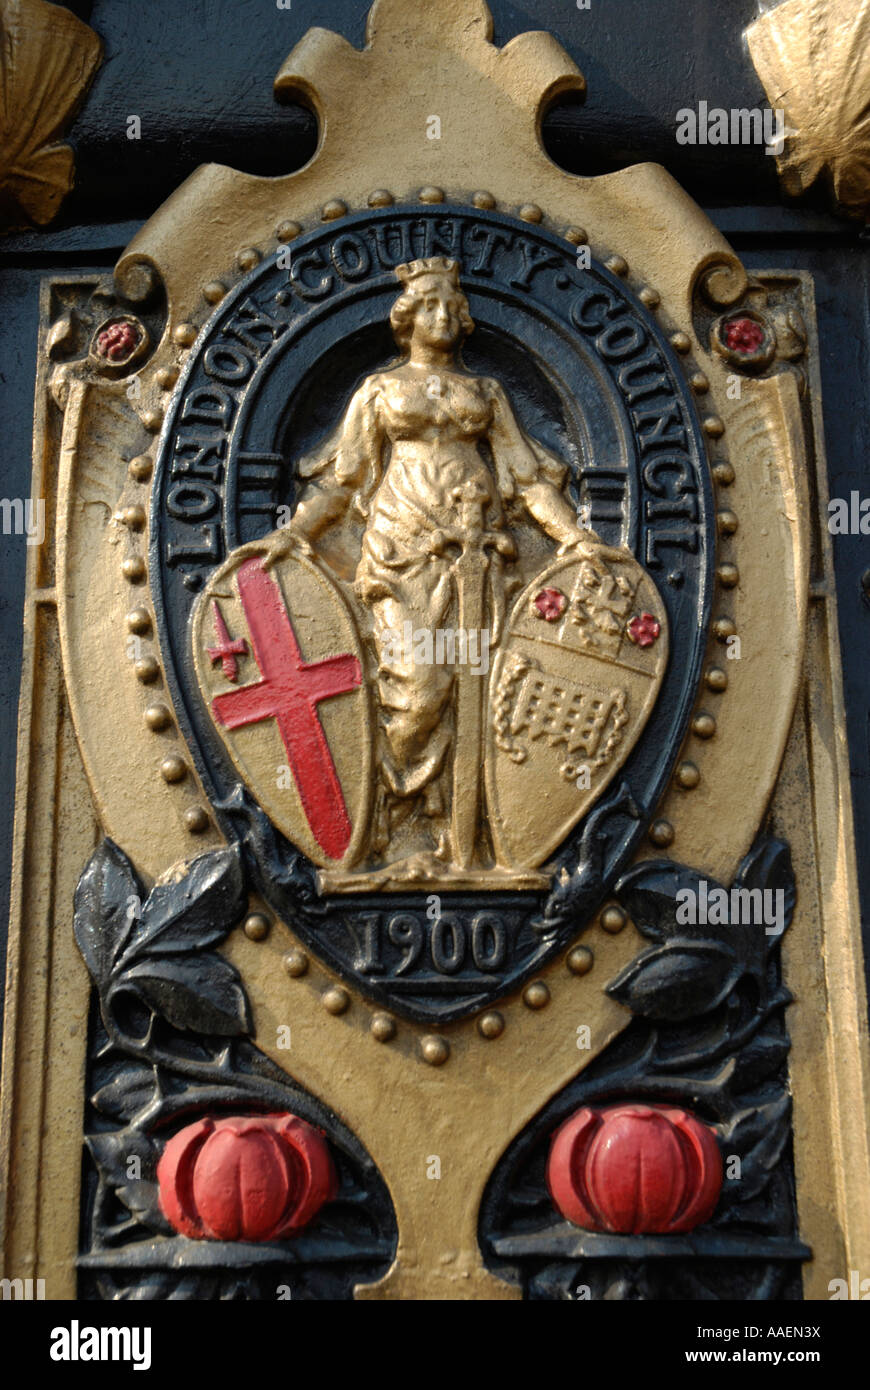 London County Council 1900 emblem on side of iron street light, Victoria Embankment, London, England, UK Stock Photo